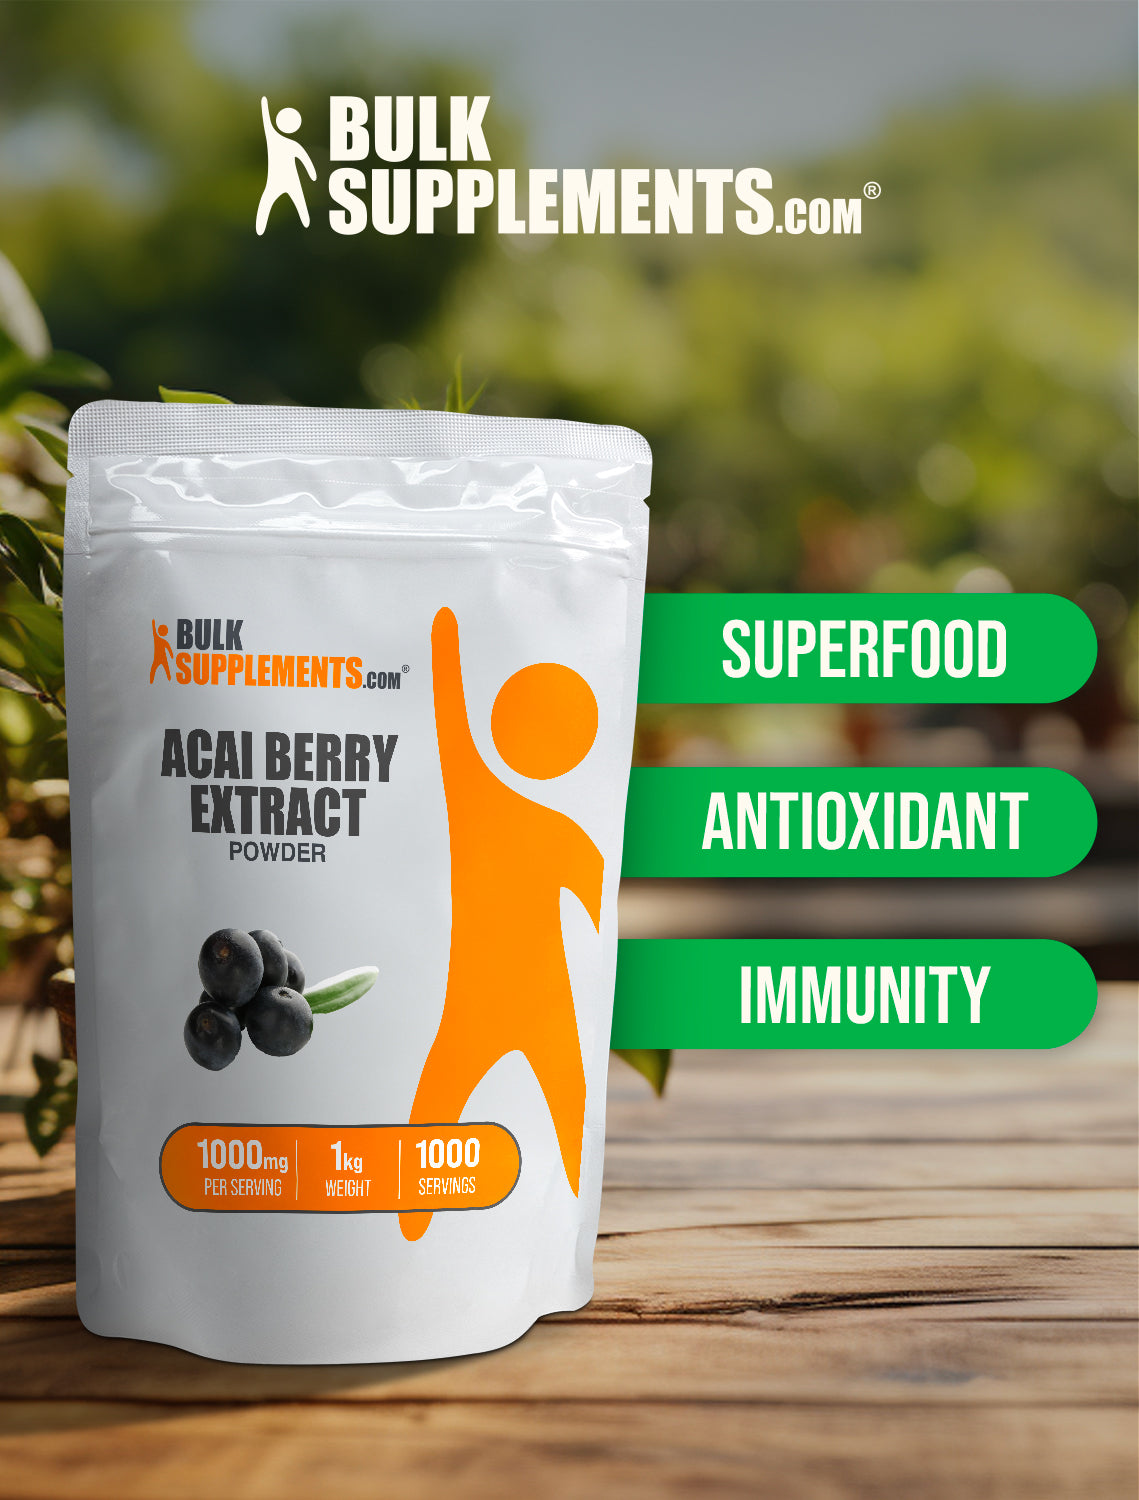 Acai Berry Extract powder keyword image 1kg